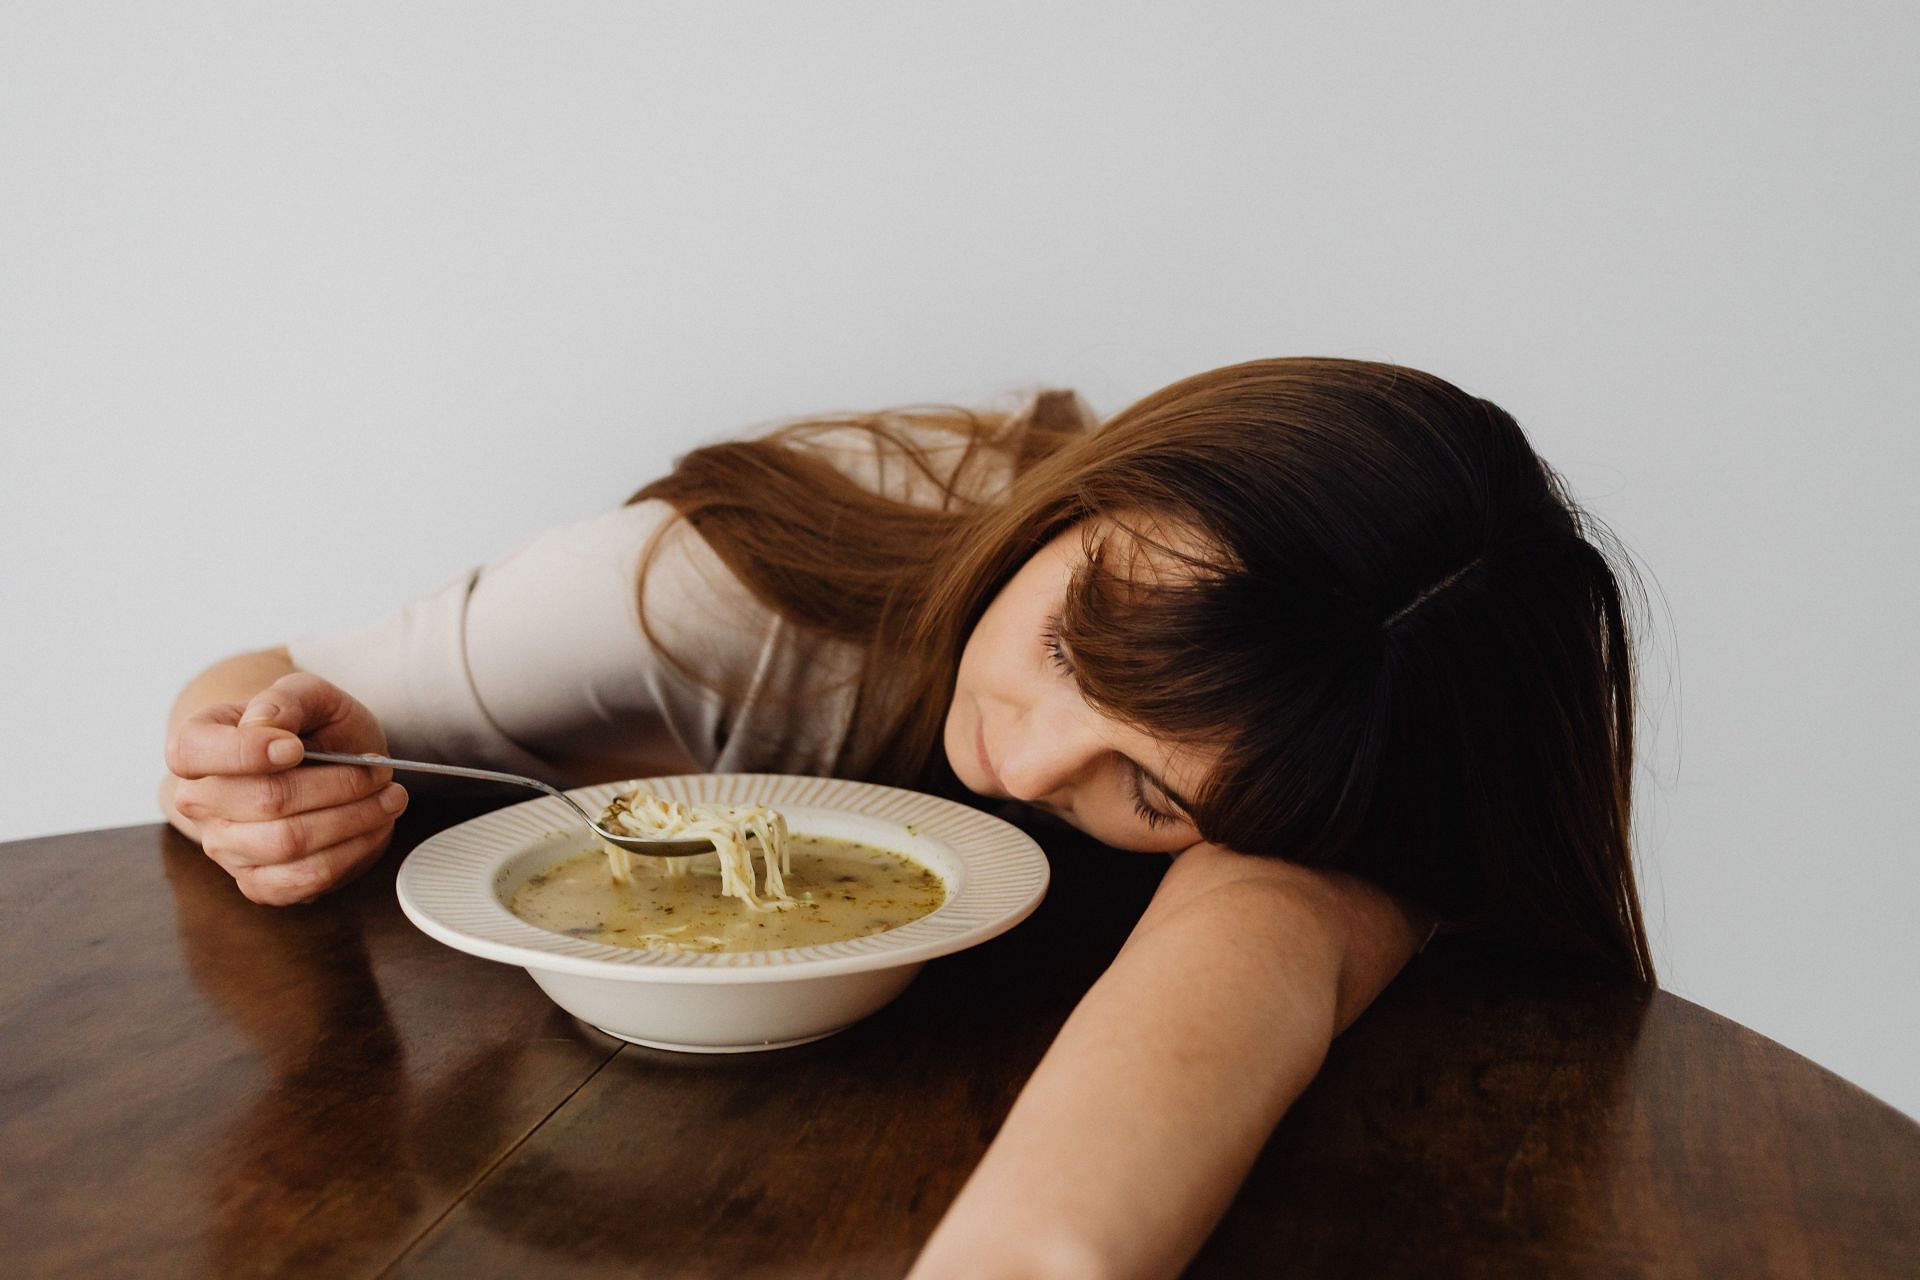 Eating habits significantly change when you have depression. (Pexels/Karolina Grabowska)